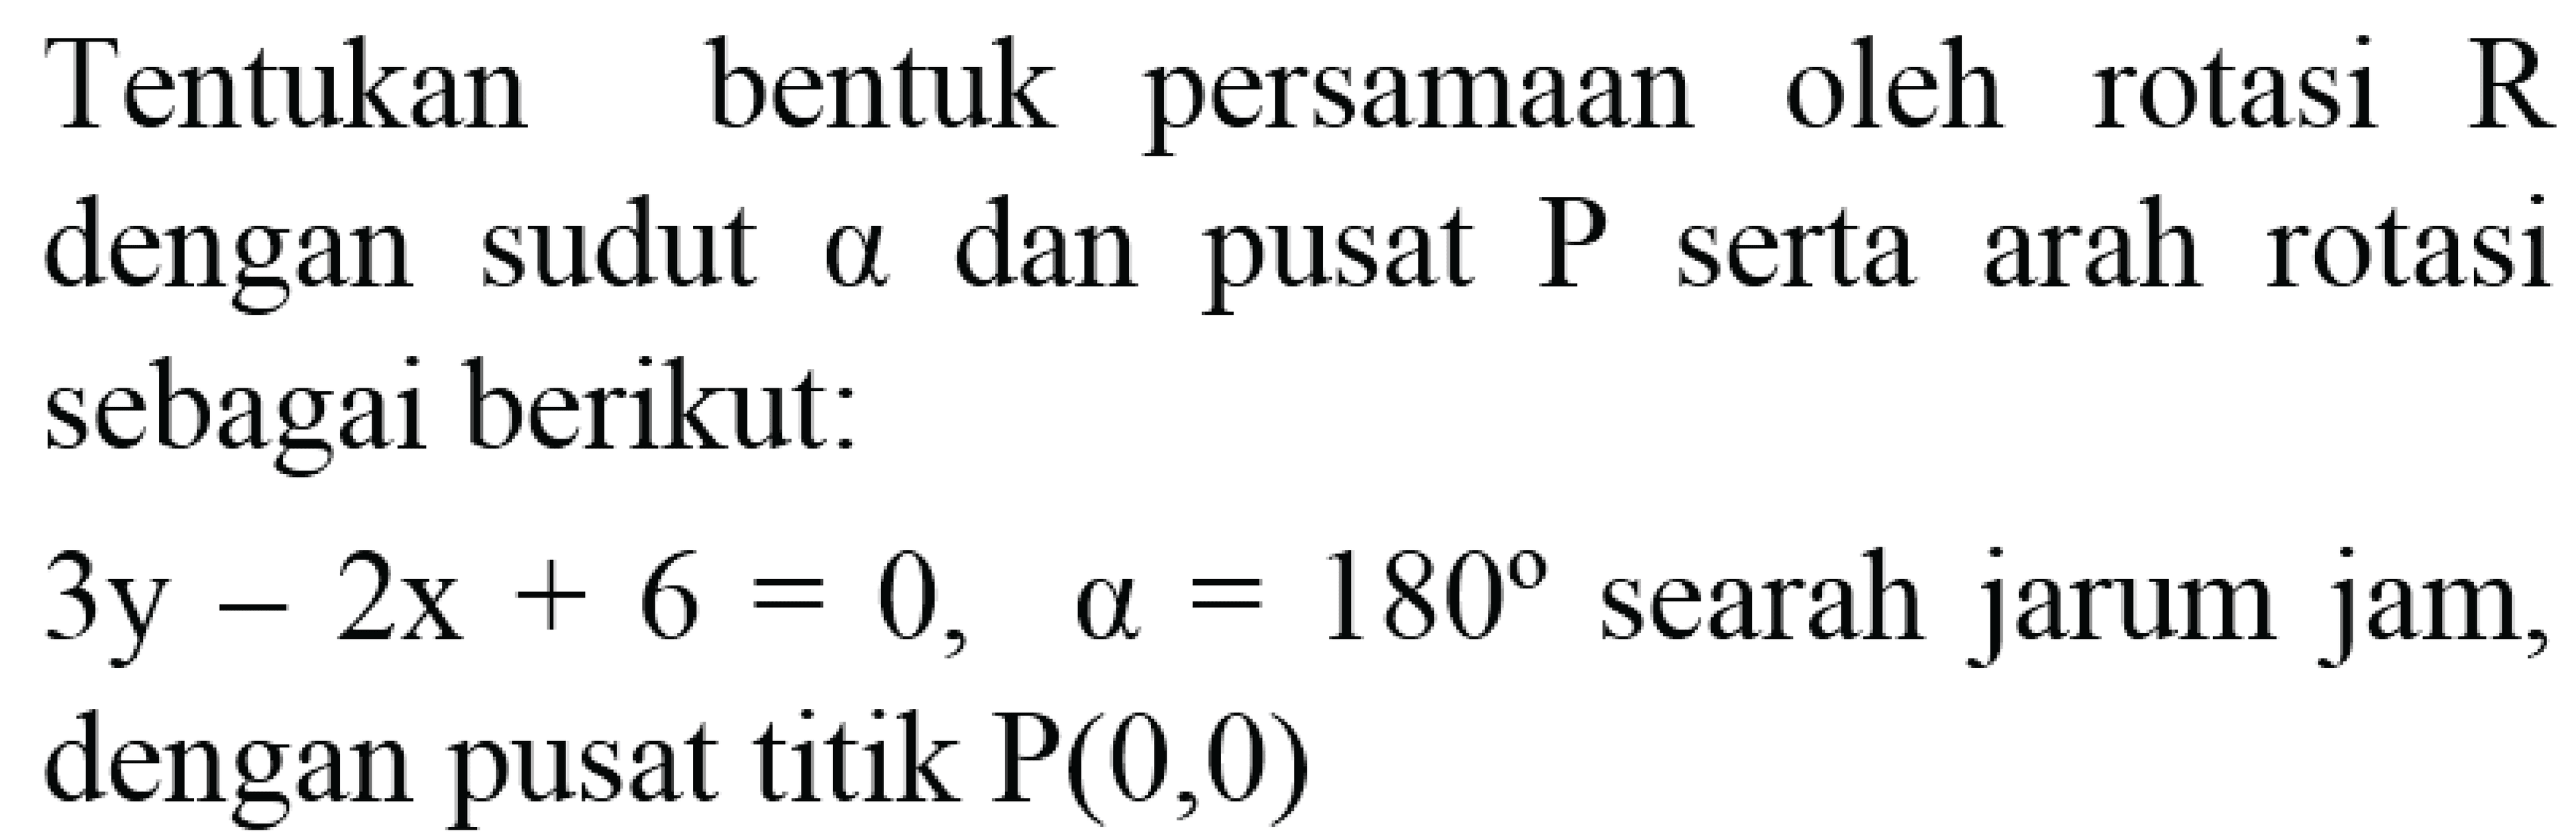 Tentukan bentuk persamaan oleh rotasi  R  dengan sudut alpha dan pusat  P  serta arah rotasi sebagai berikut:
 3y-2x+6=0,  alpha=180  searah jarum jam, dengan pusat titik  P(0,0) 